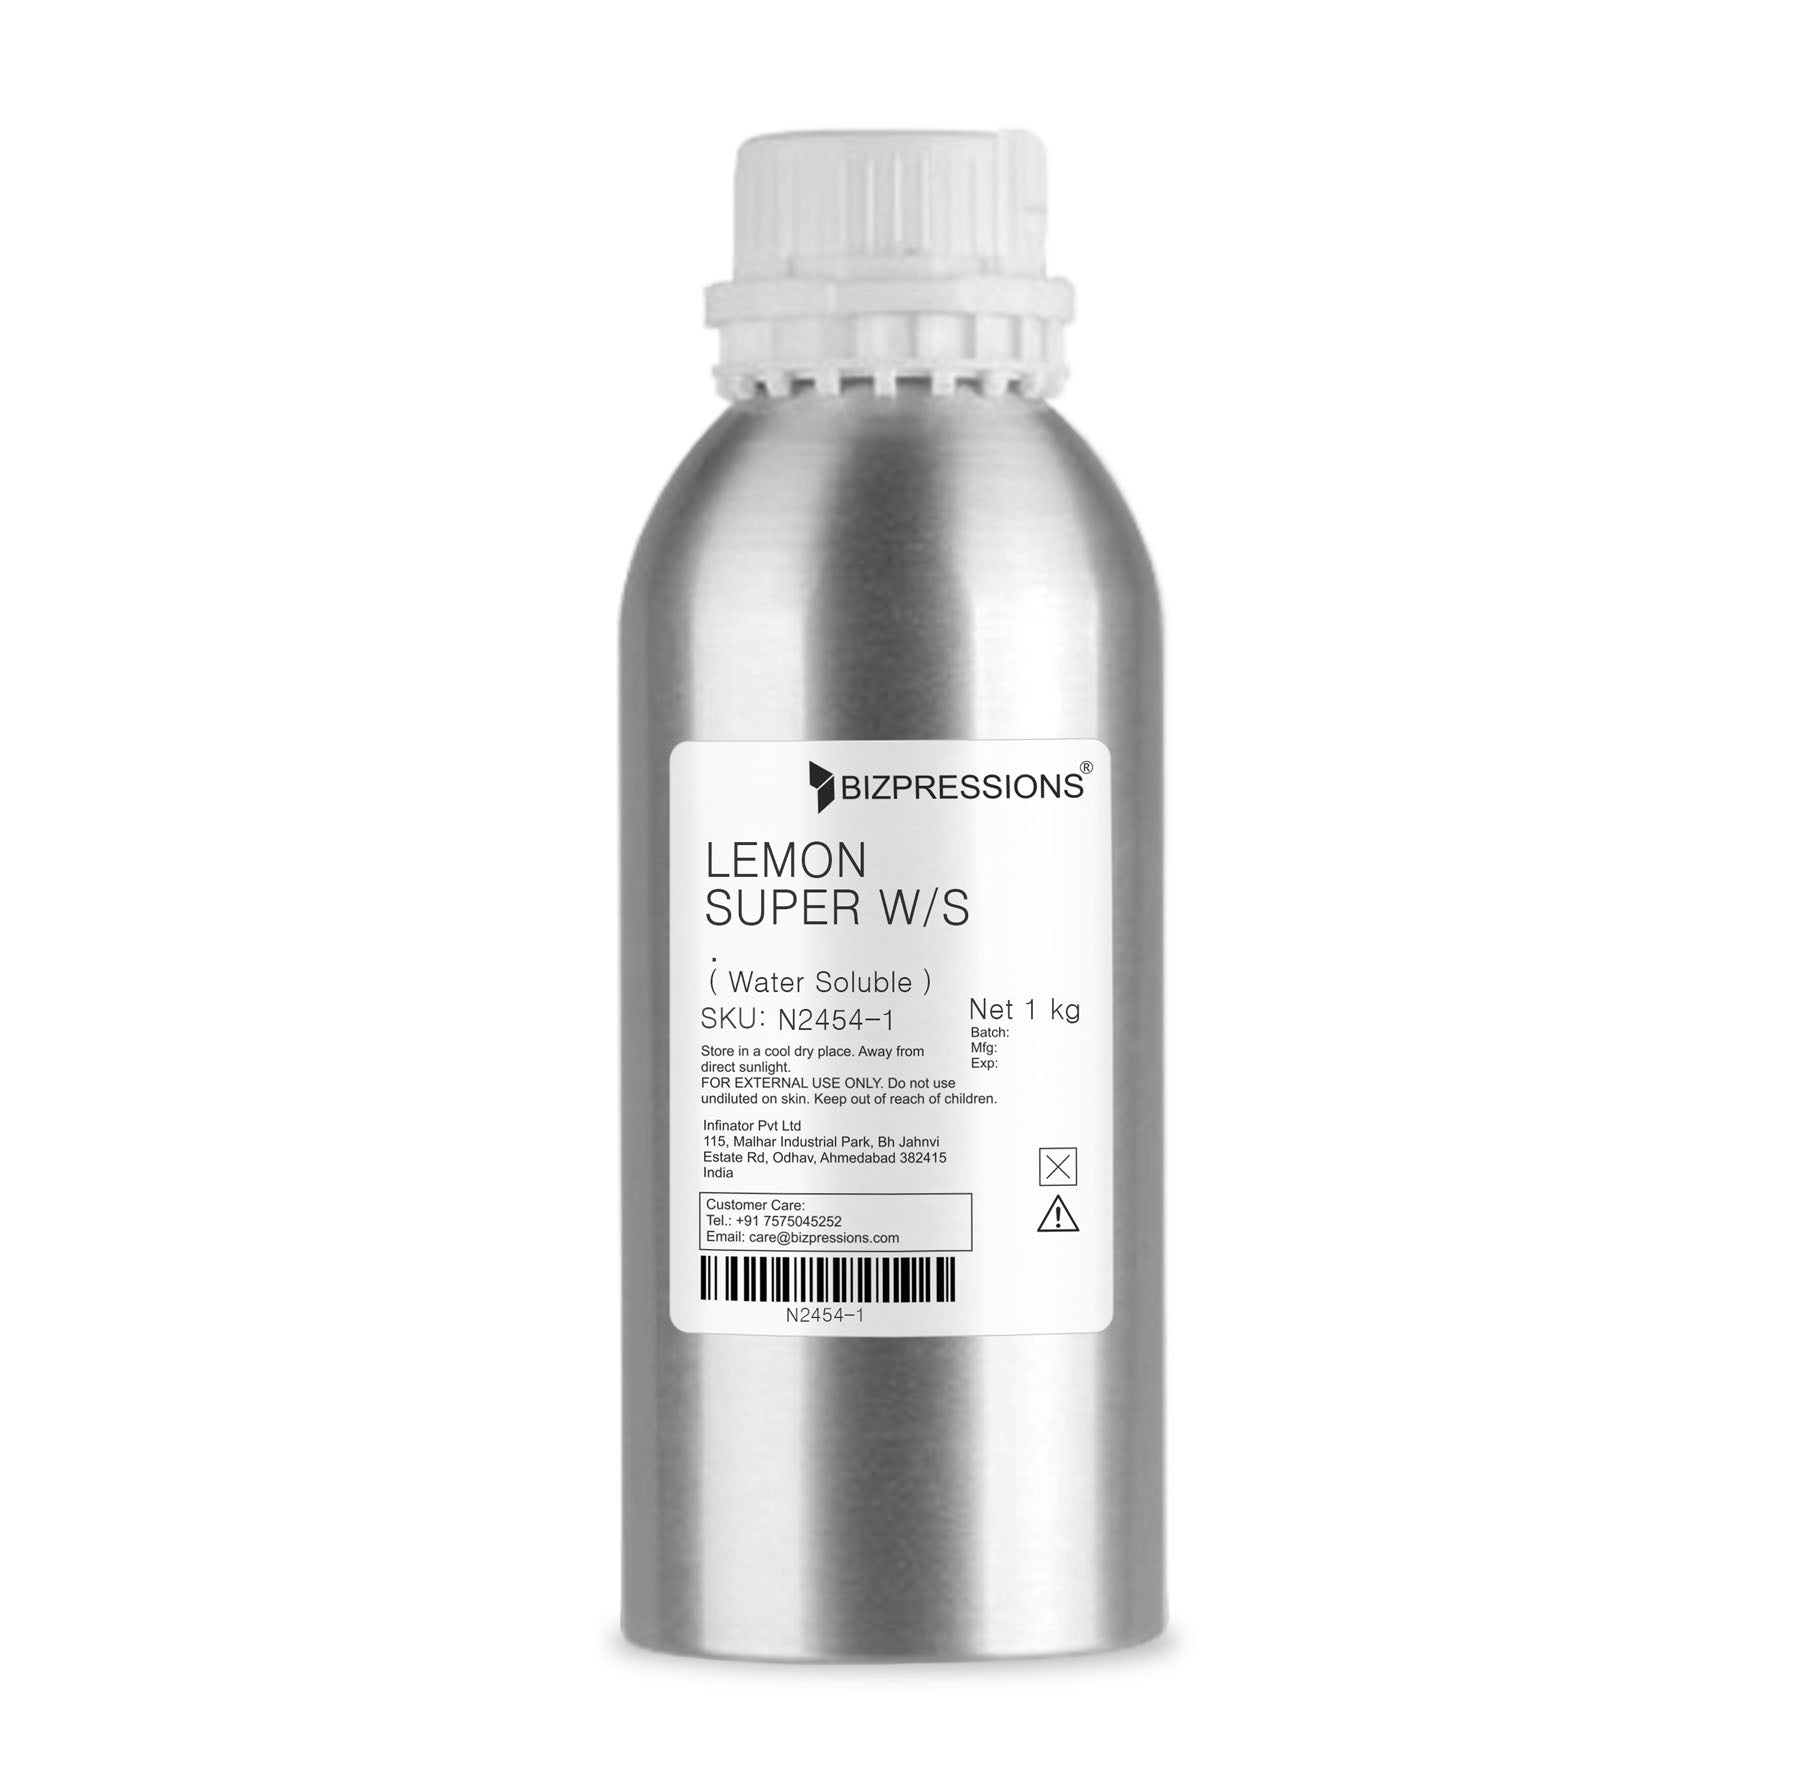 LEMON SUPER W/S - Fragrance ( Water Soluble ) - 100 gm